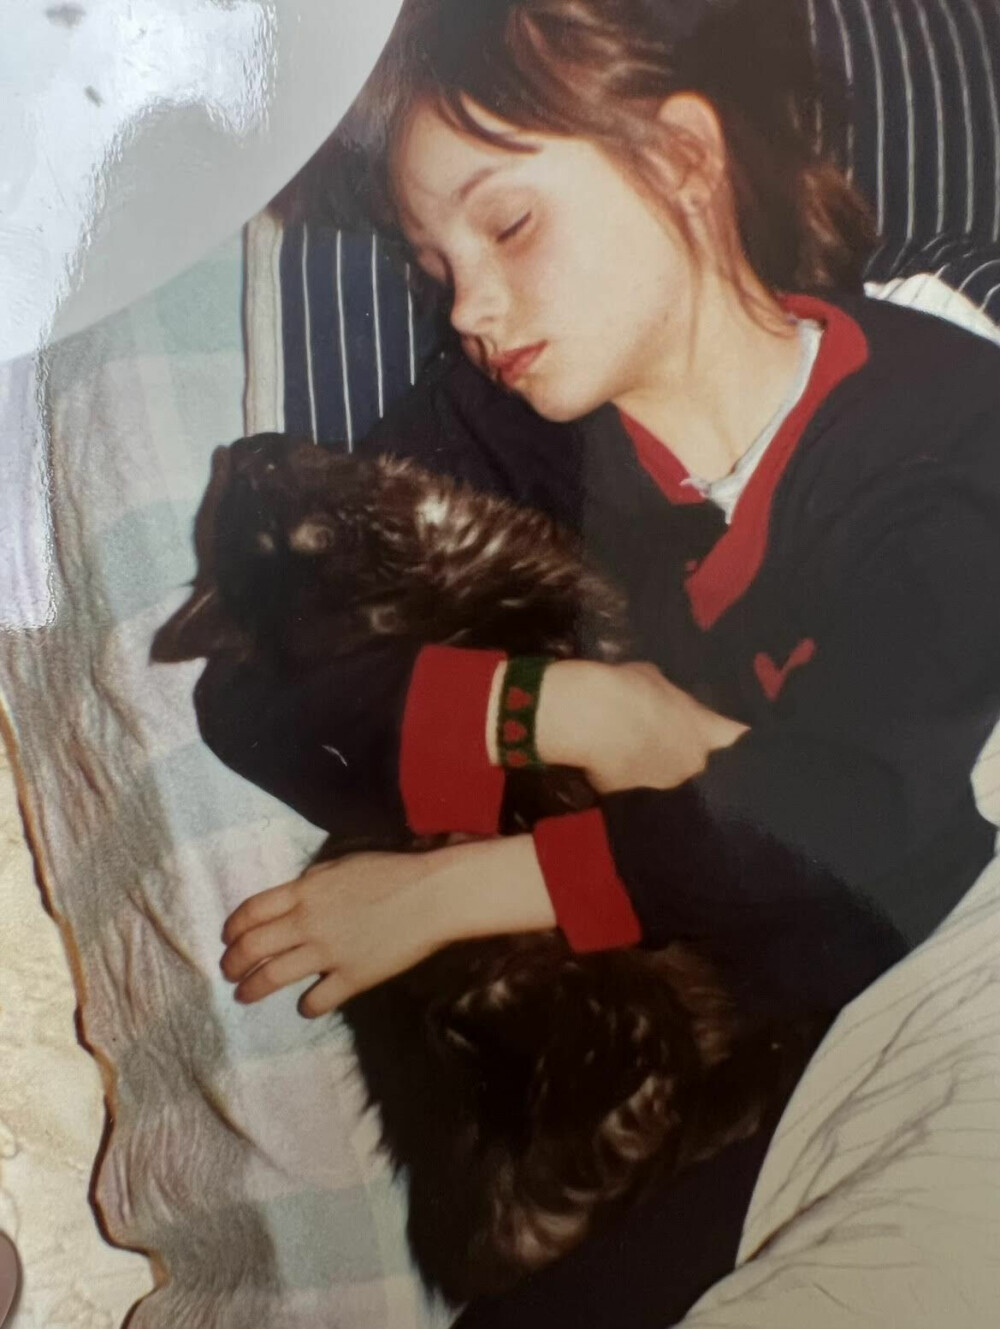 <b>LILLE ISABEL:</b> Her er Isabel seks år gammel og ligger og sover med katten Gyda i armene.  